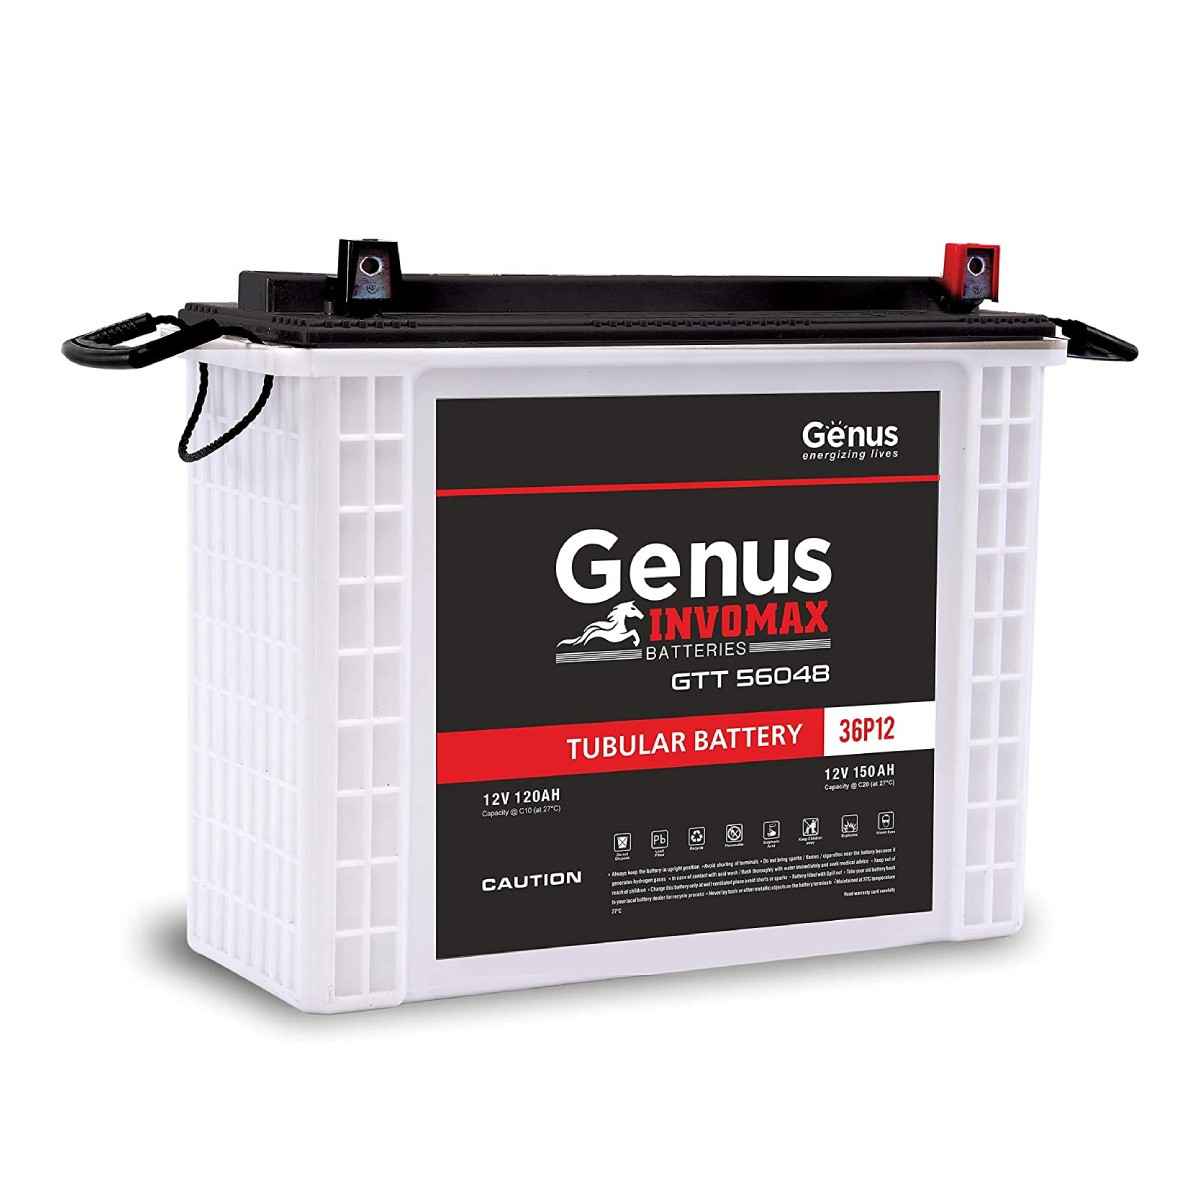 Genus Invomax GTT56048 PP 150 AH Inverter बैटरी  